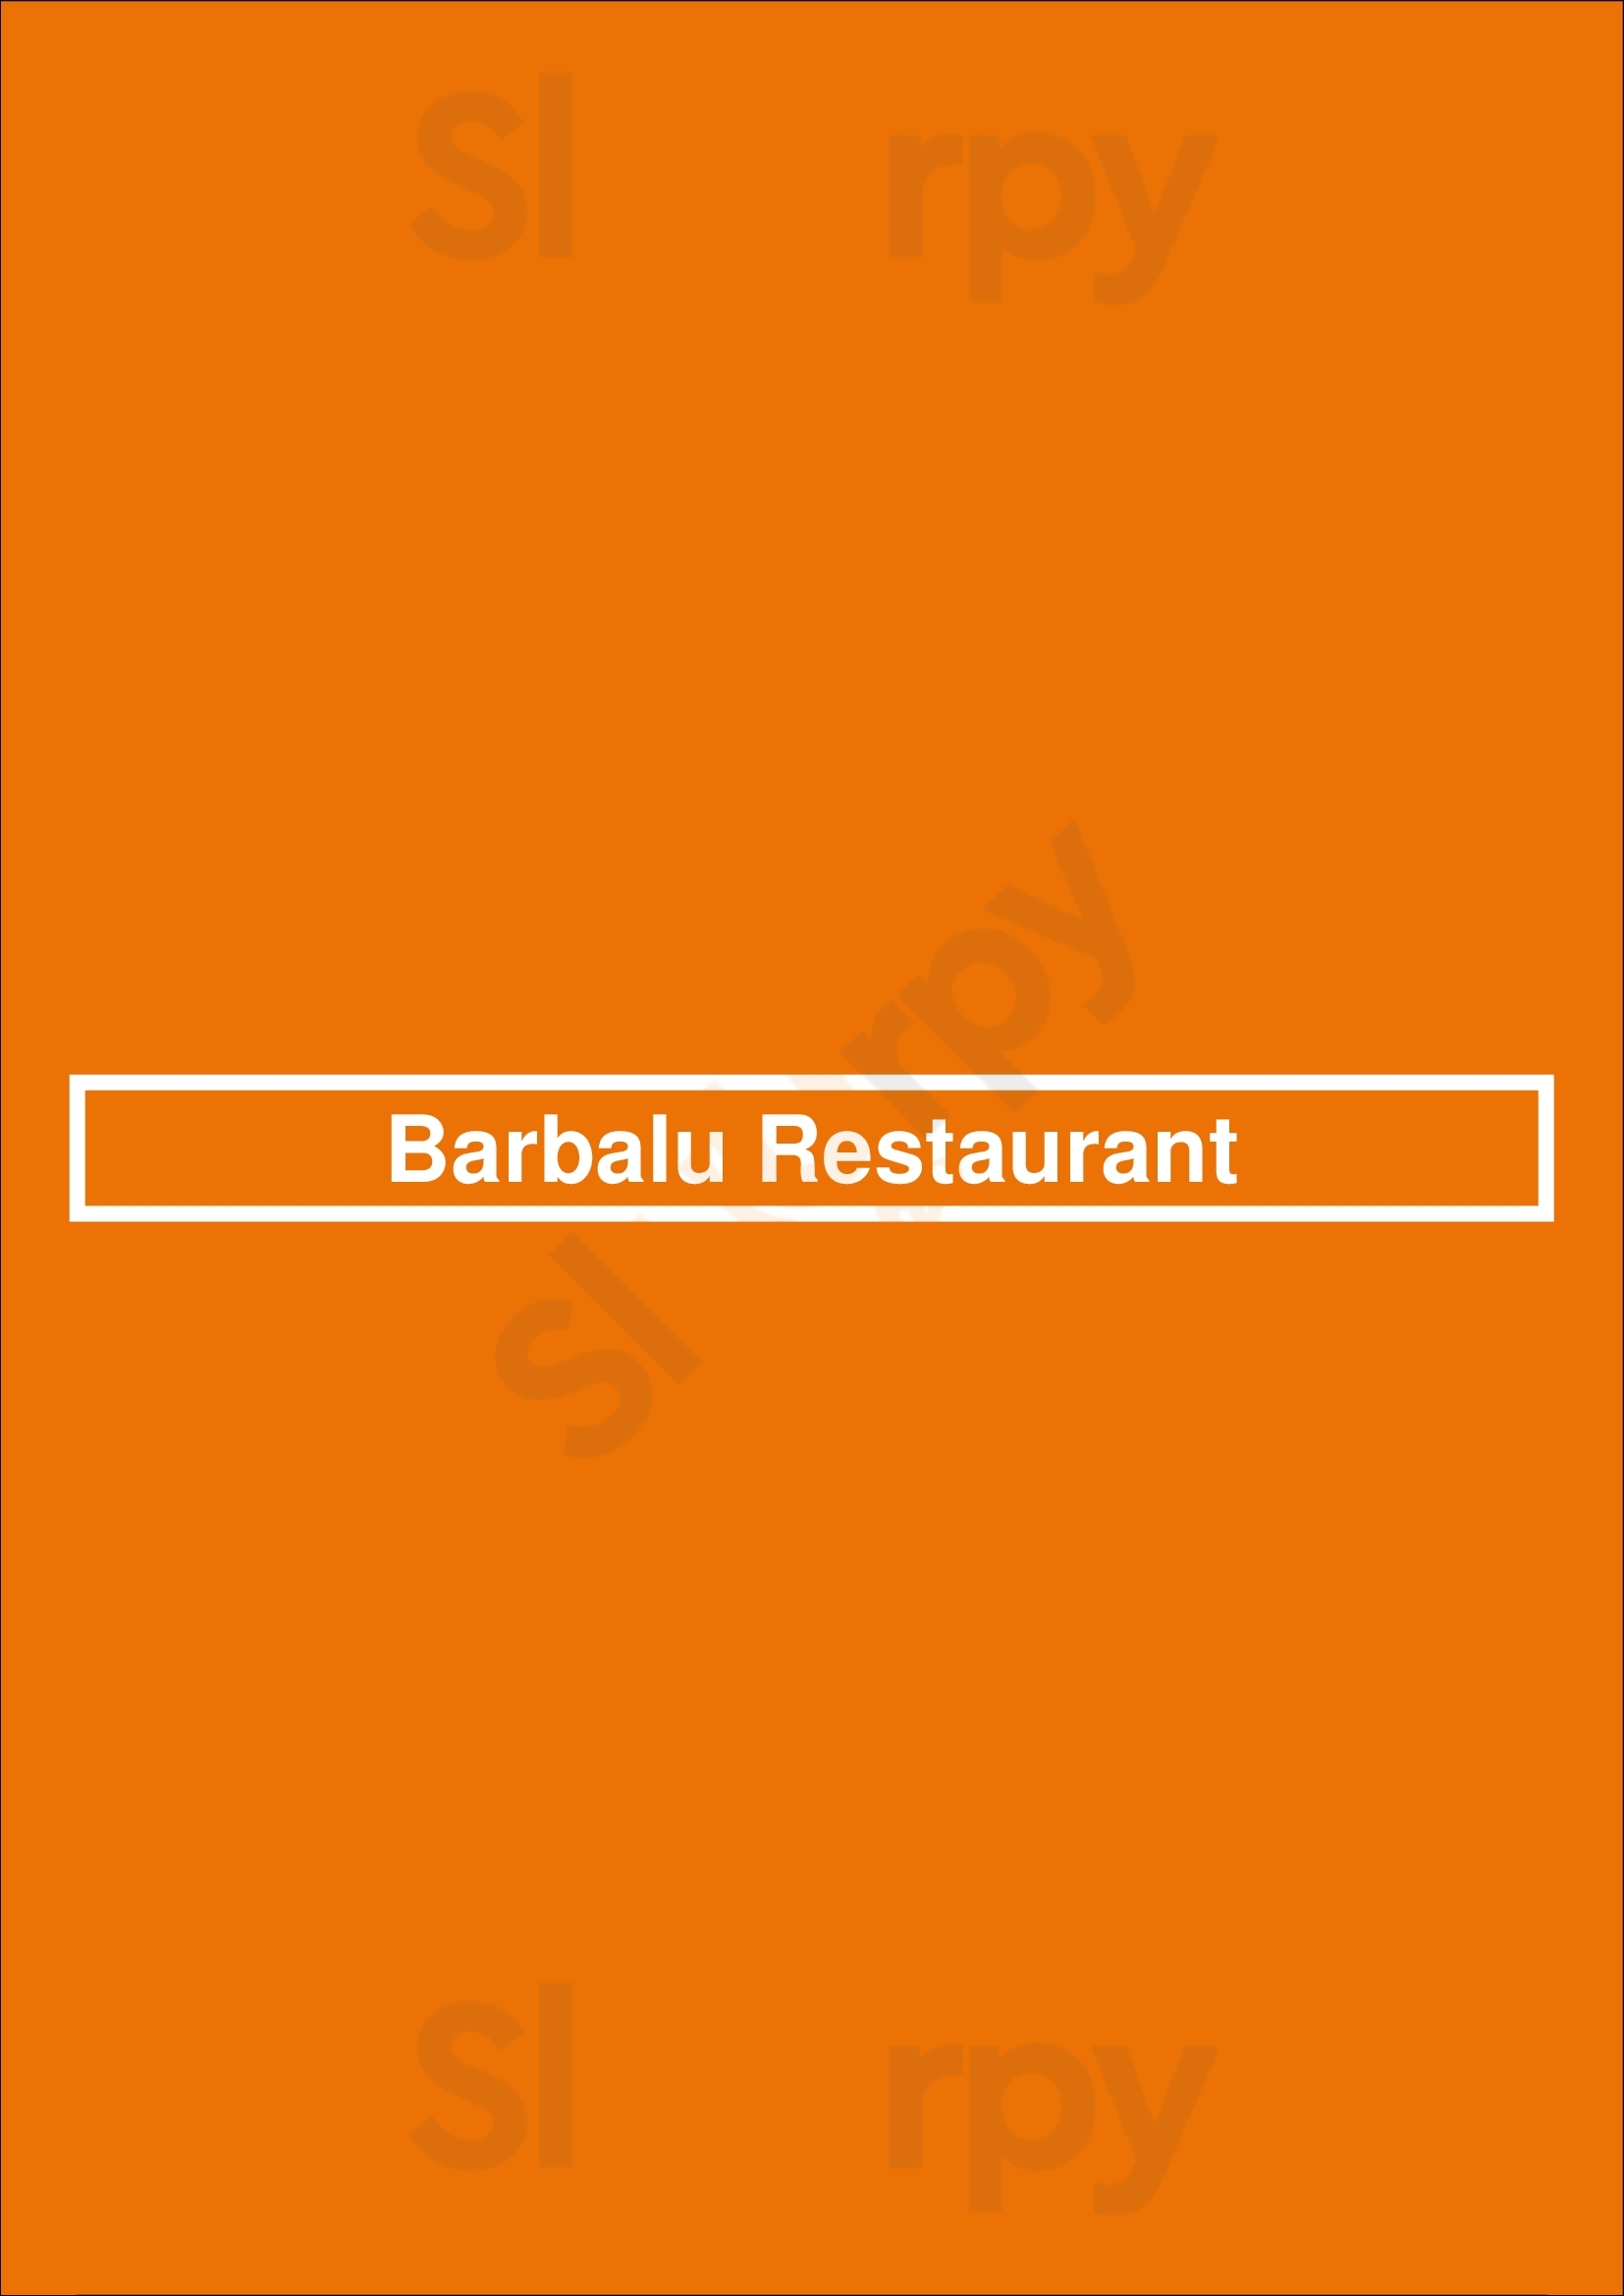 Barbalu Restaurant New York City Menu - 1